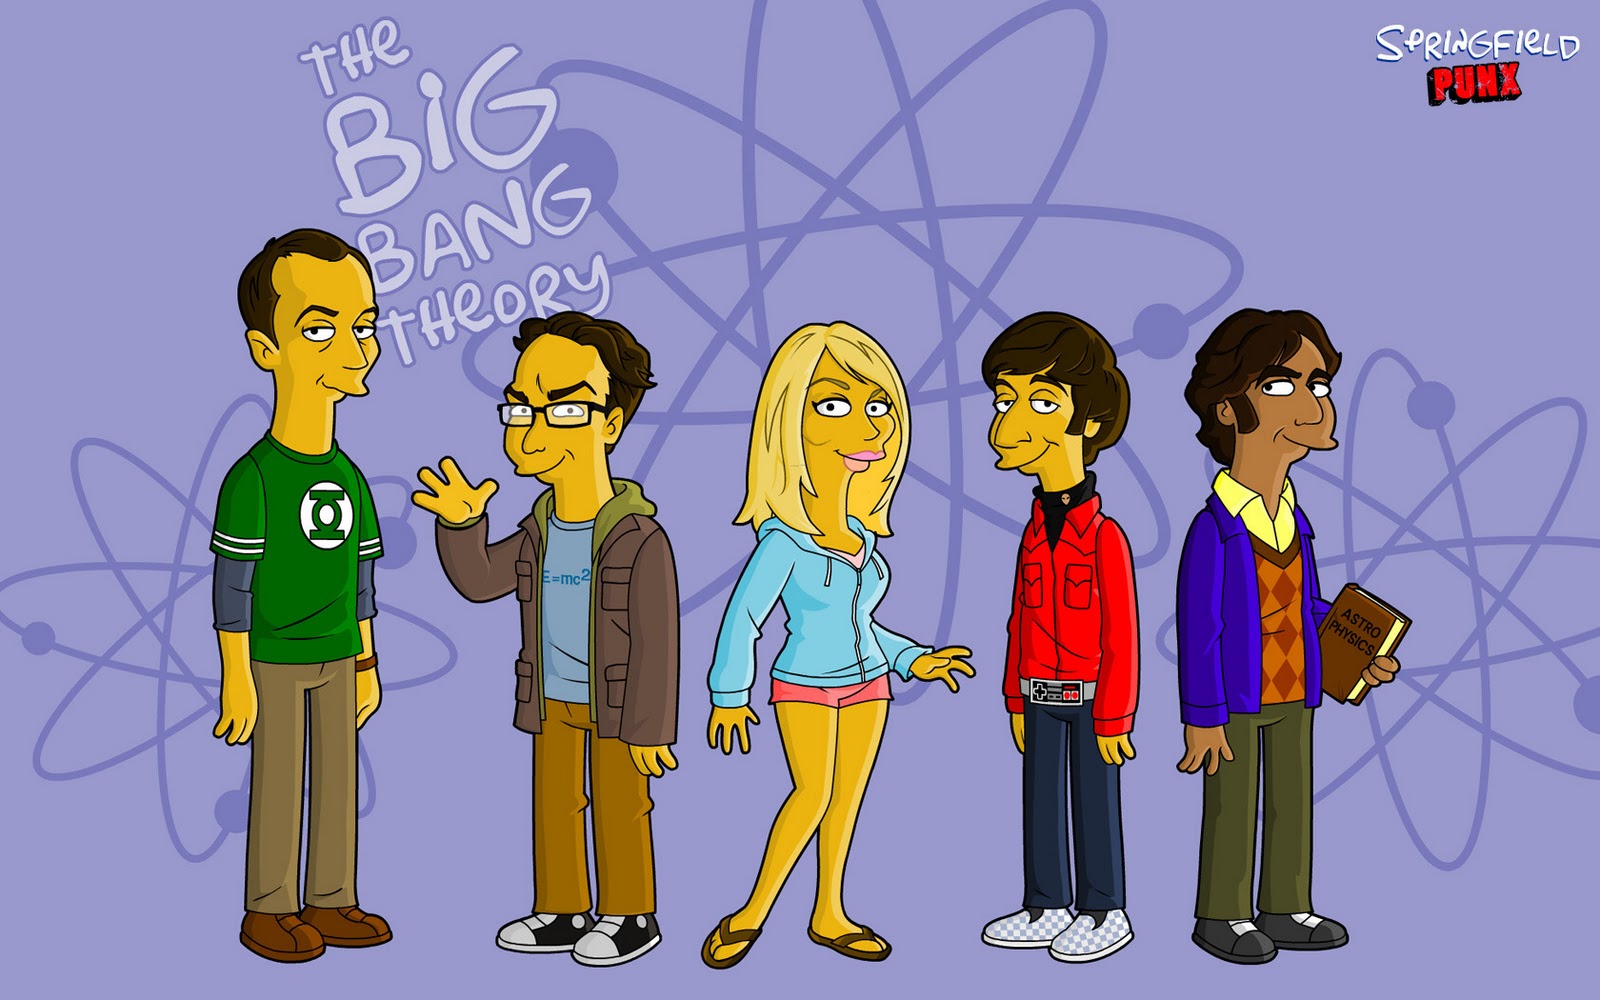 Big Bang Theory X Simpsons